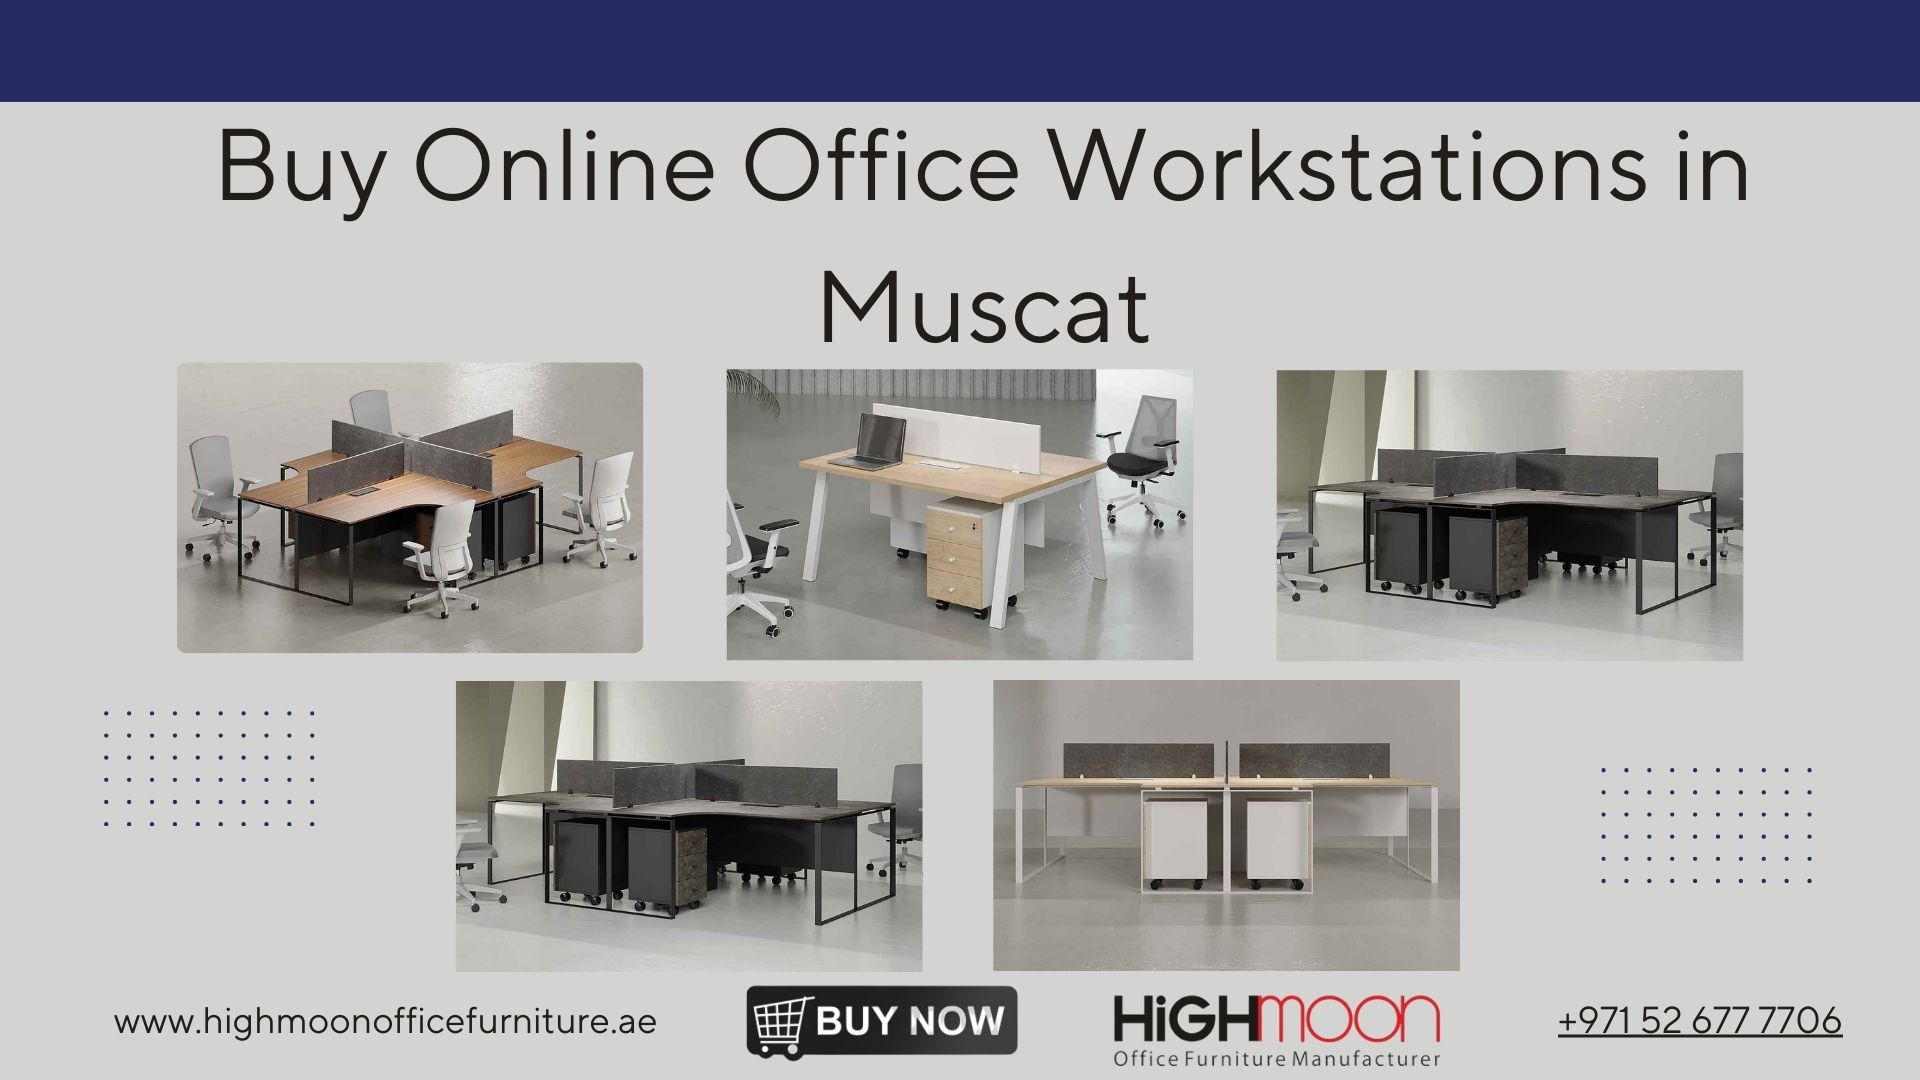 Buy Online Office Workstations in Muscat